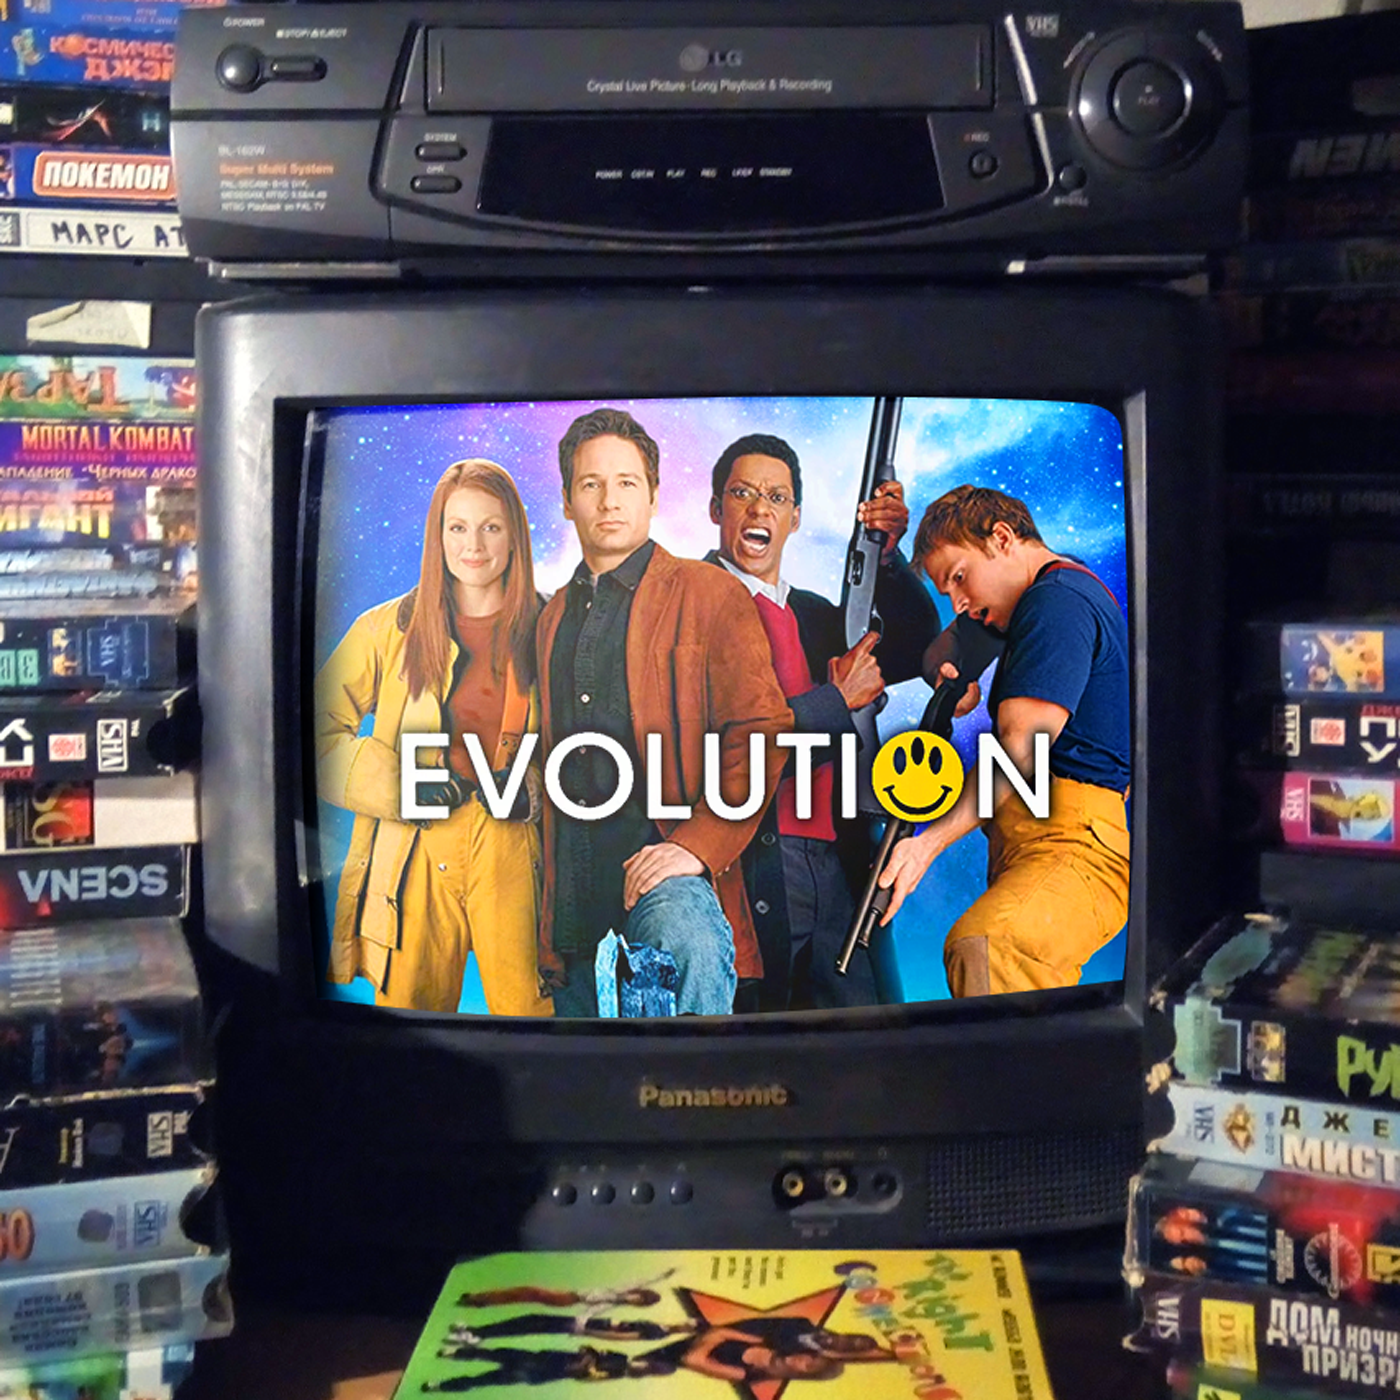 Эволюция / Evolution (2001)